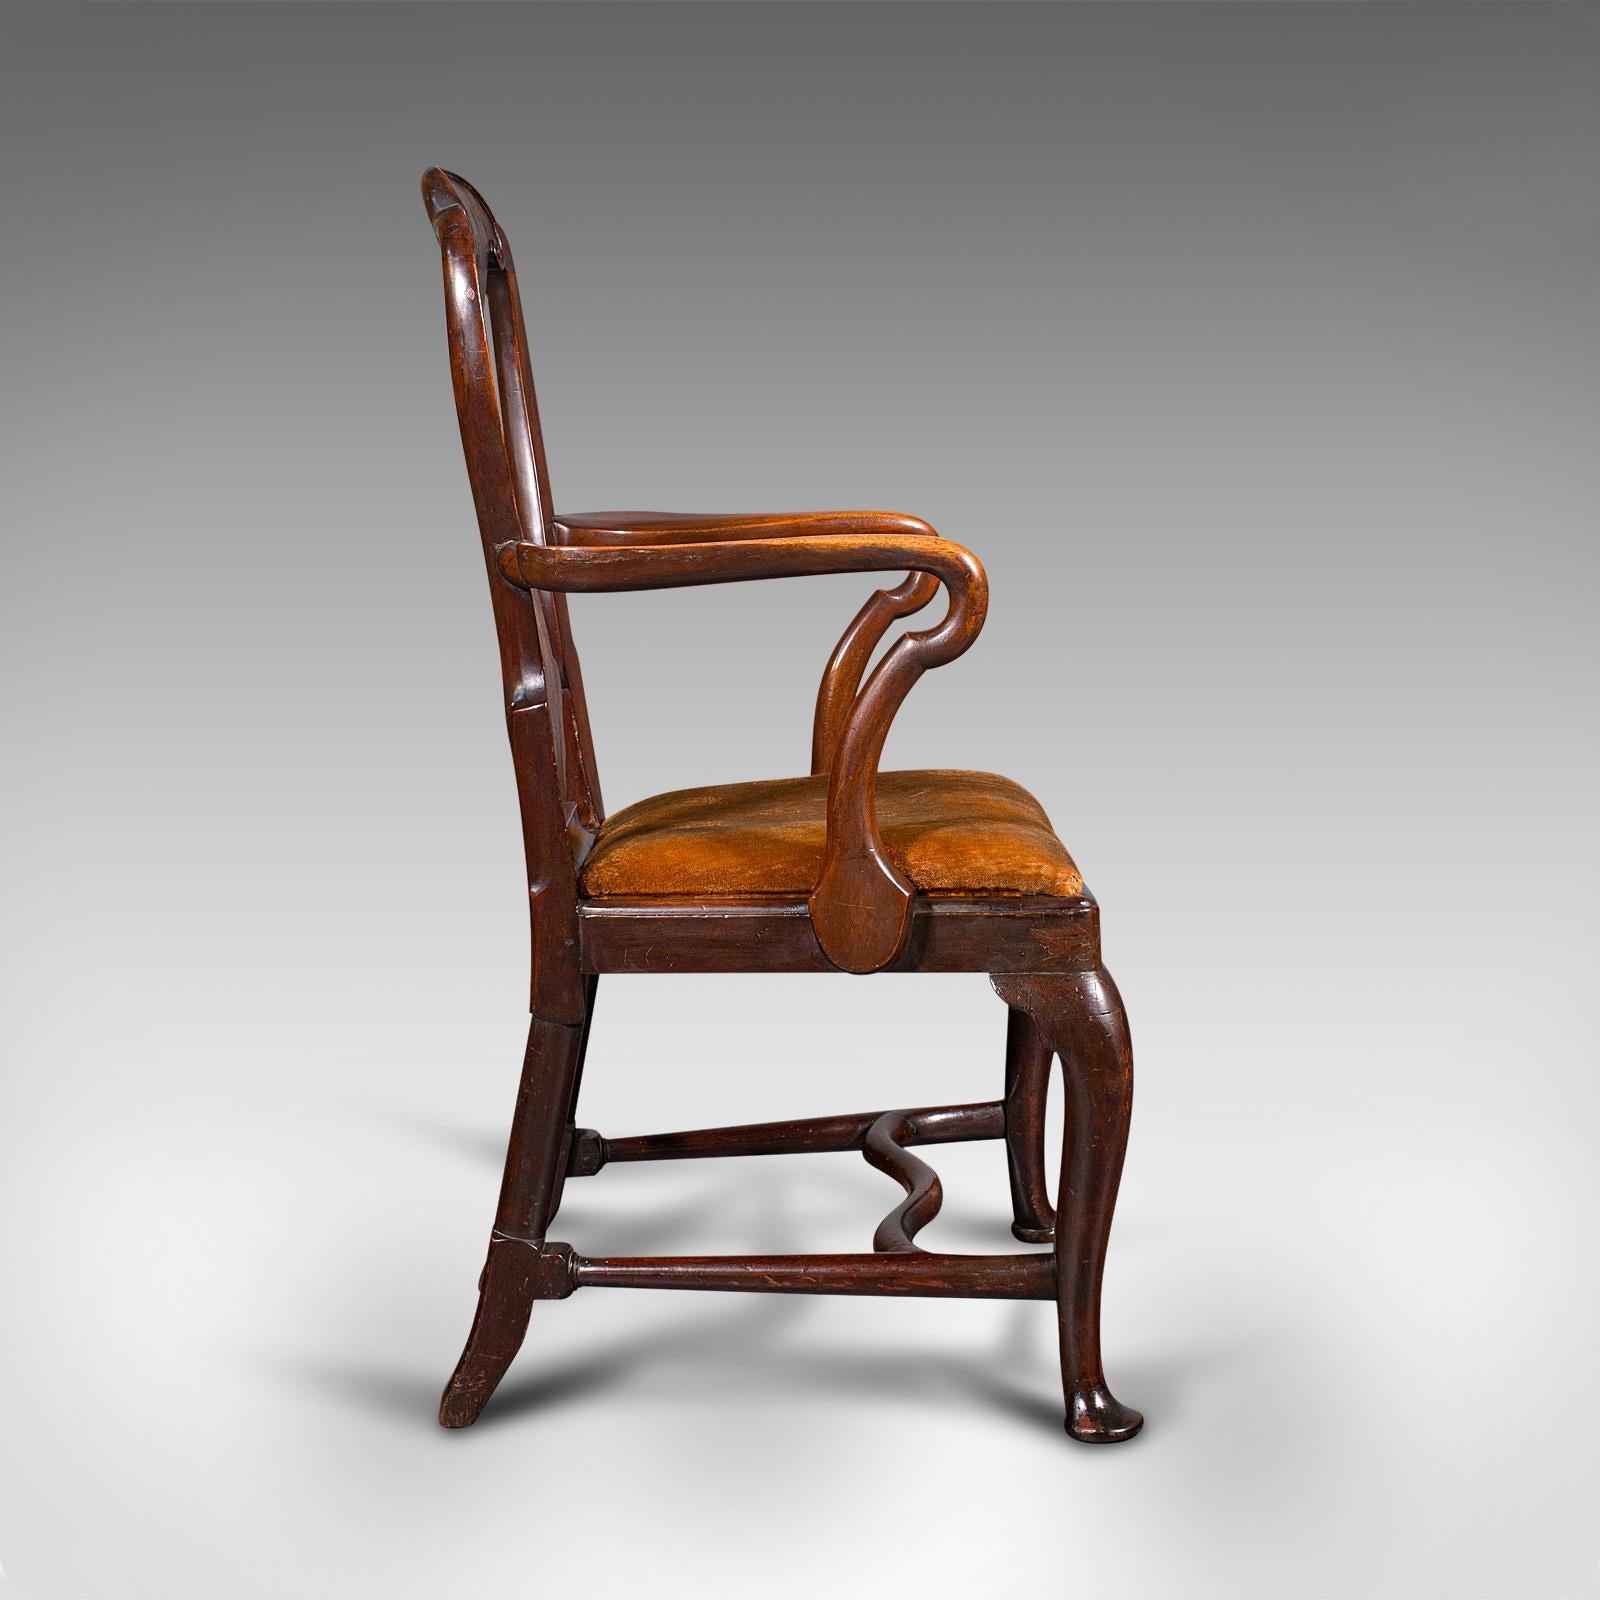 18th Century Antique Marquetry Elbow Chair, Dutch, Beech, Fruitwood, Carver, Georgian, C.1800